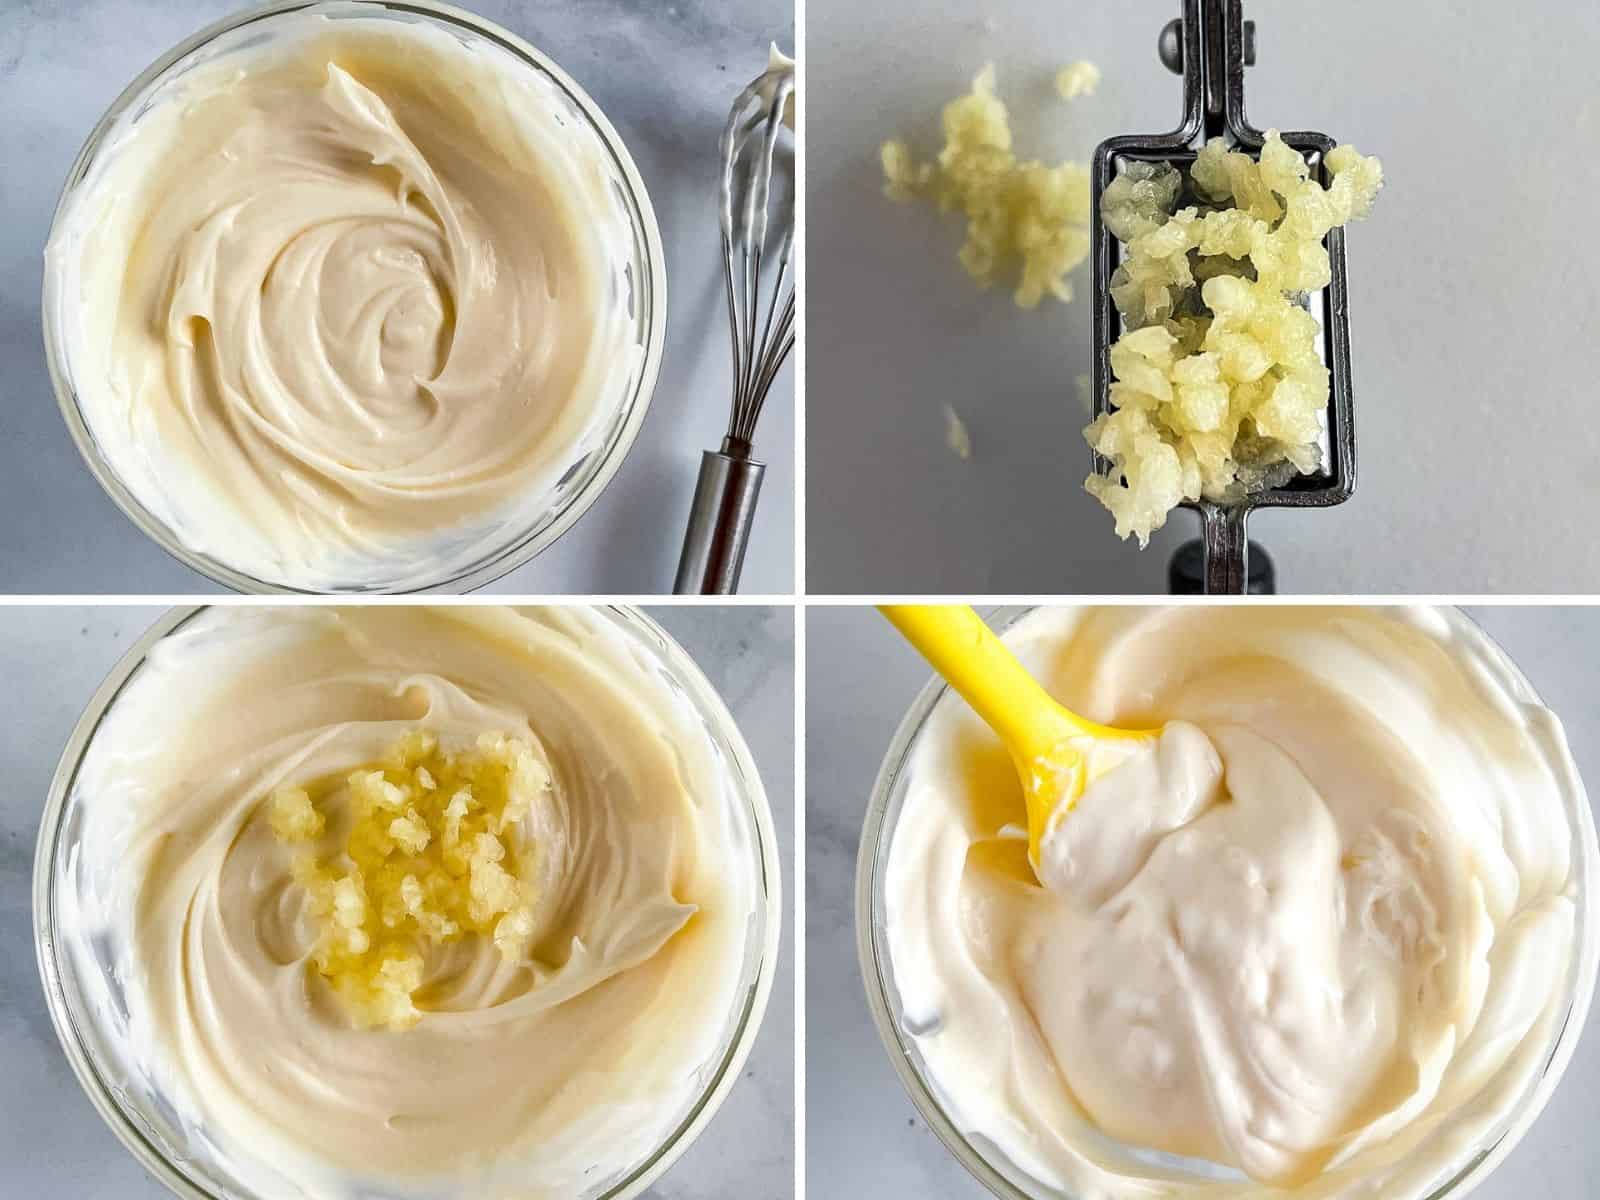 Four steps to making garlic mayonnaise. Bowl of mayo. Garlic press with garlic. Stirring garlic and lemon juice into mayo.